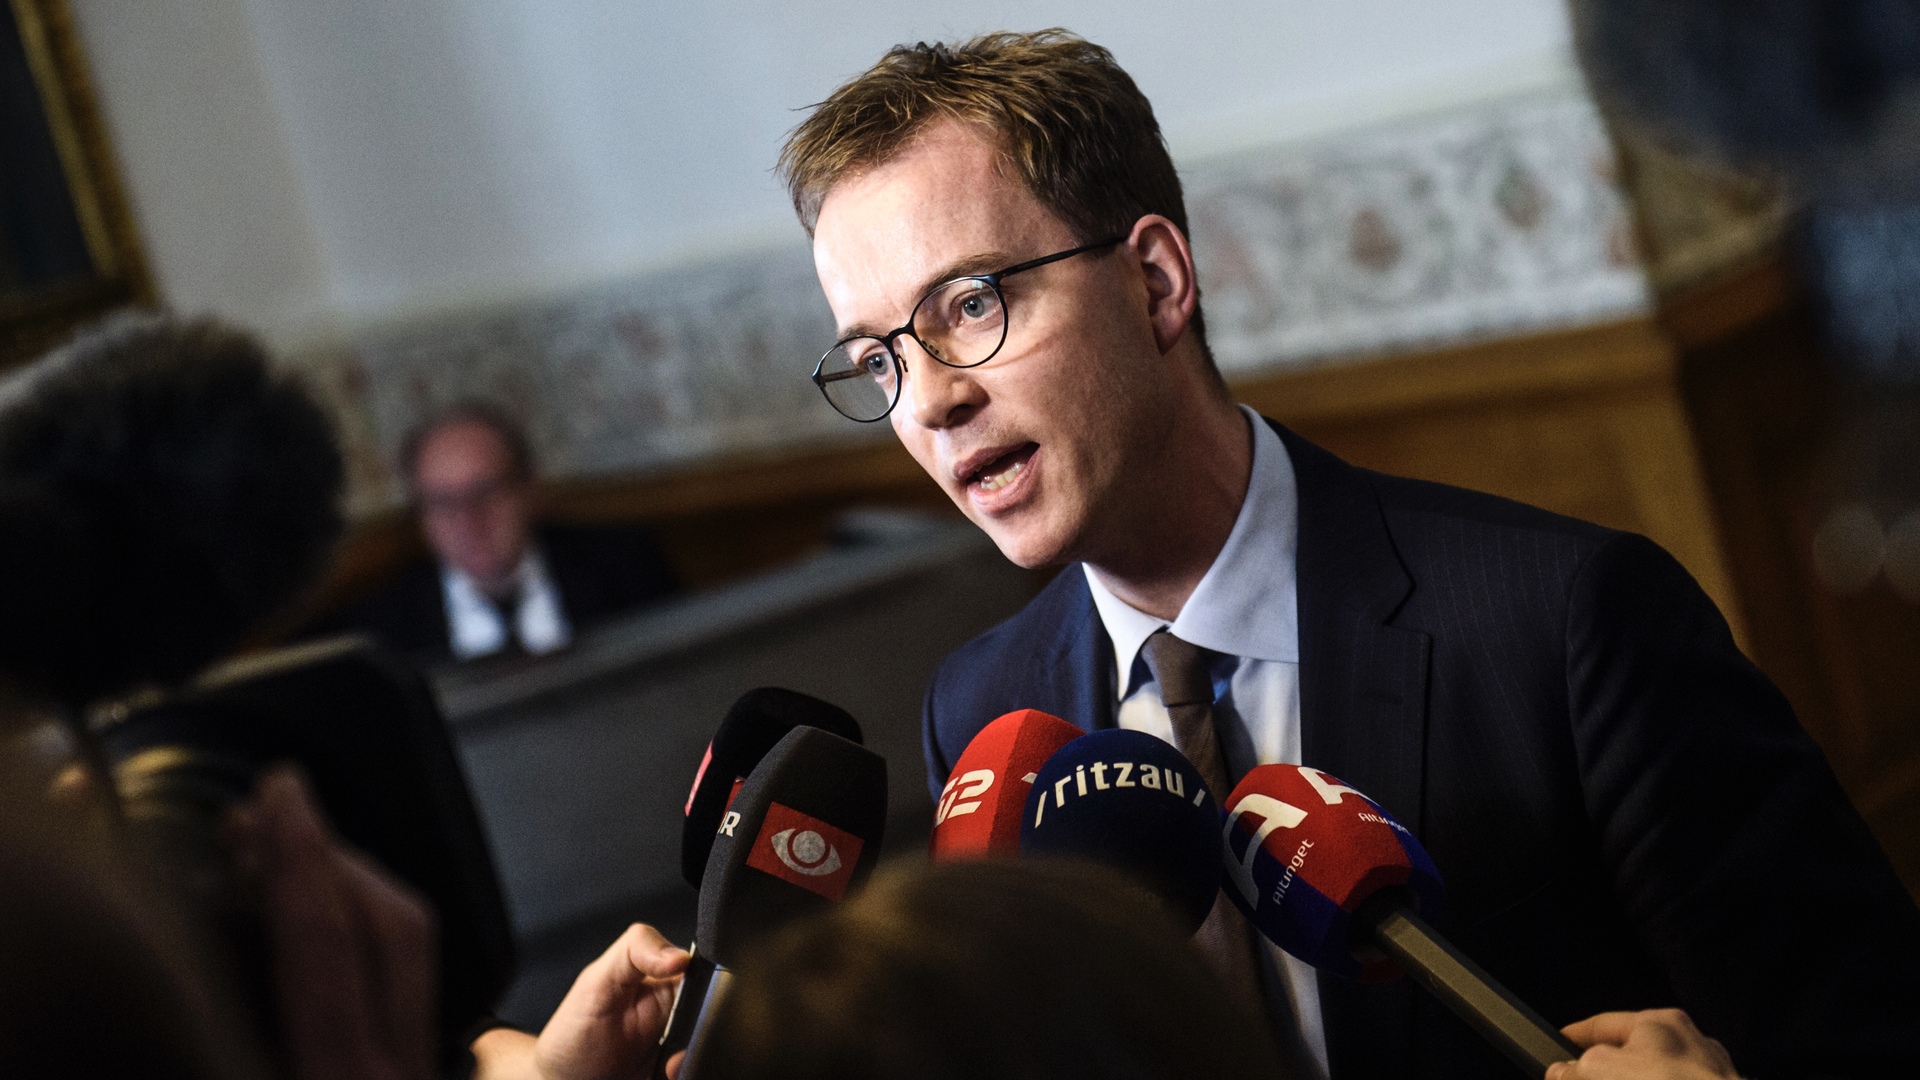 Mikael Kristensen: Regeringen skylder dansk natur at følge op på sit regeringsgrundlag og sikre den samtidige beskyttelse